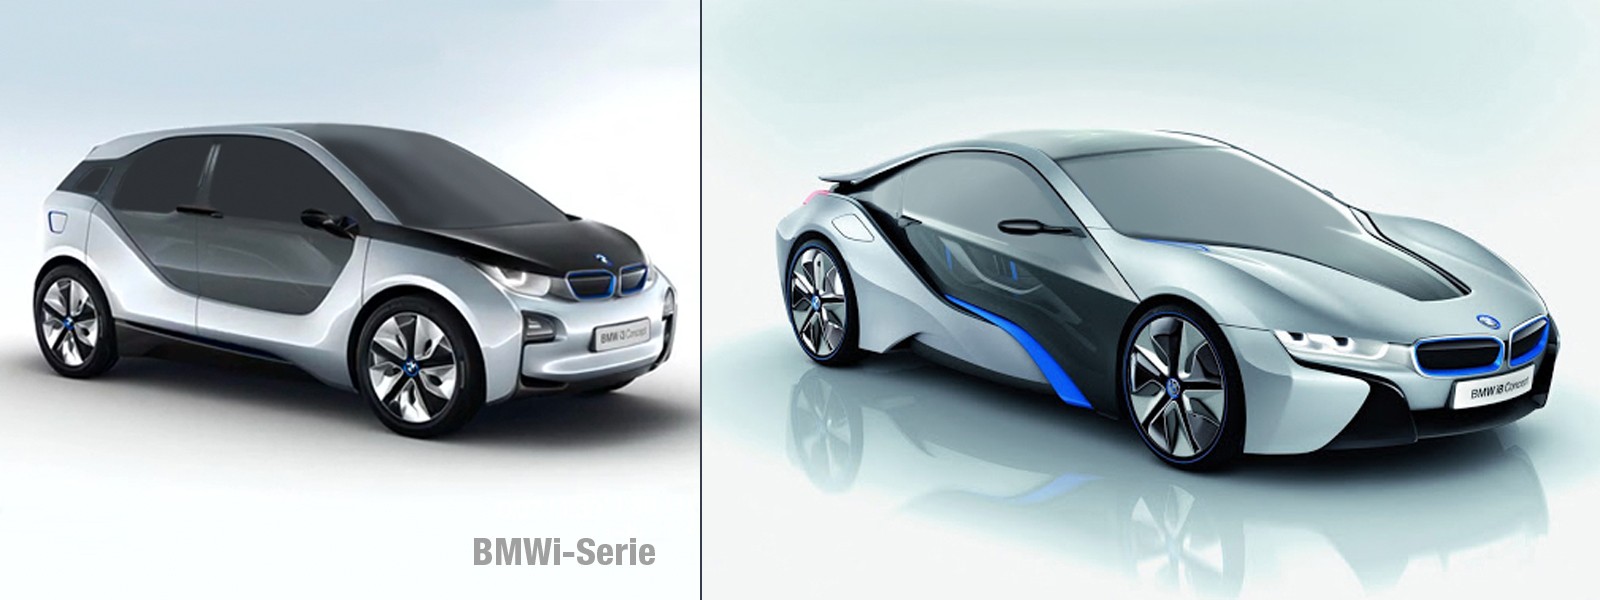 BMWi Series